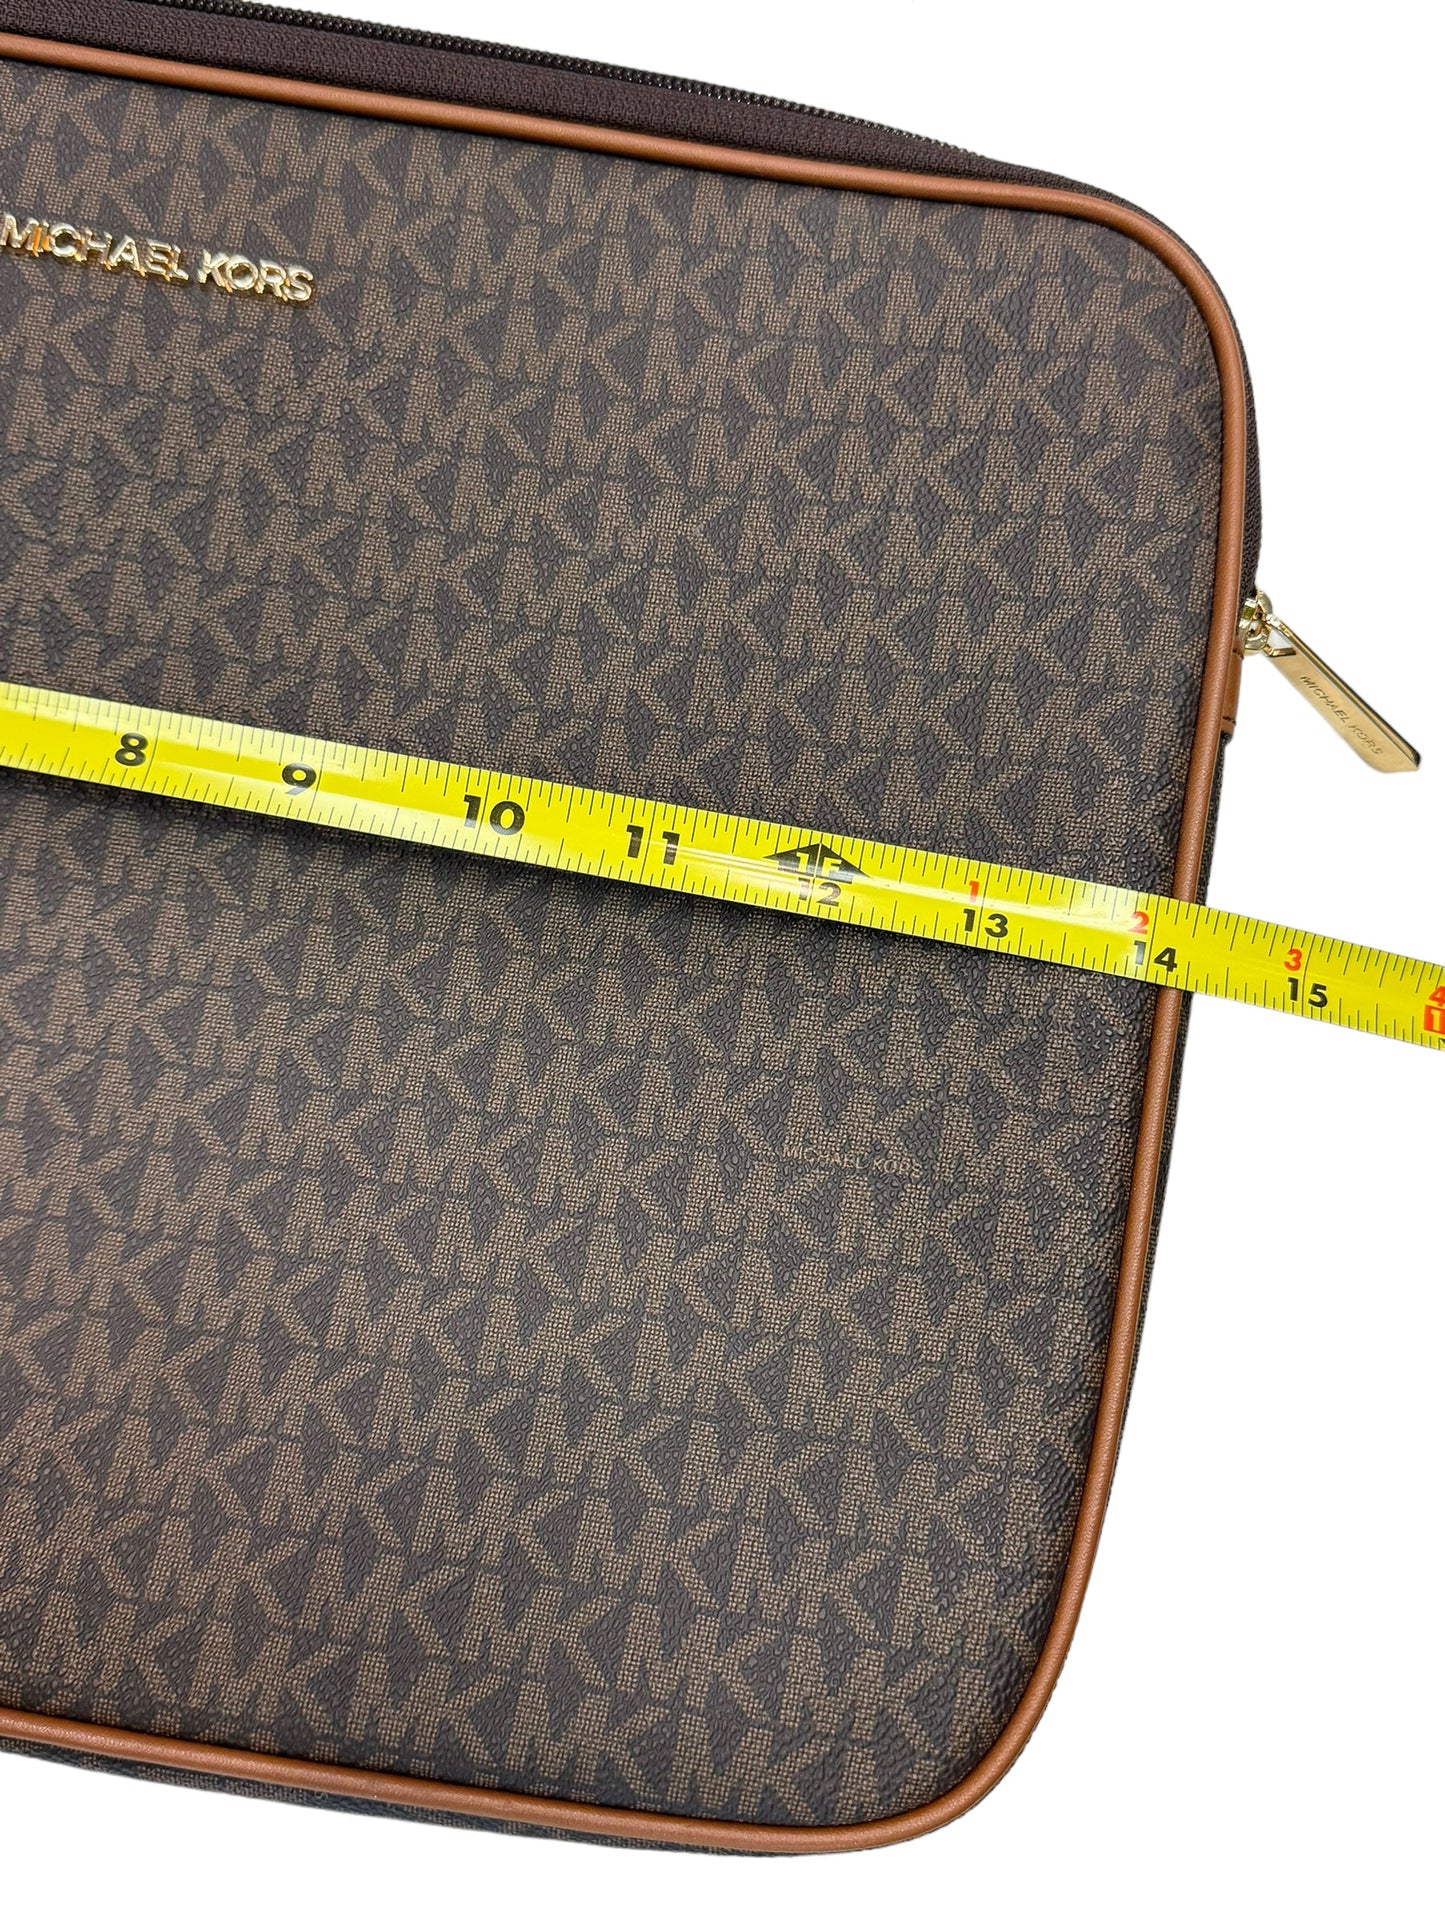 Laptop Bag Designer Michael Kors, Size Medium